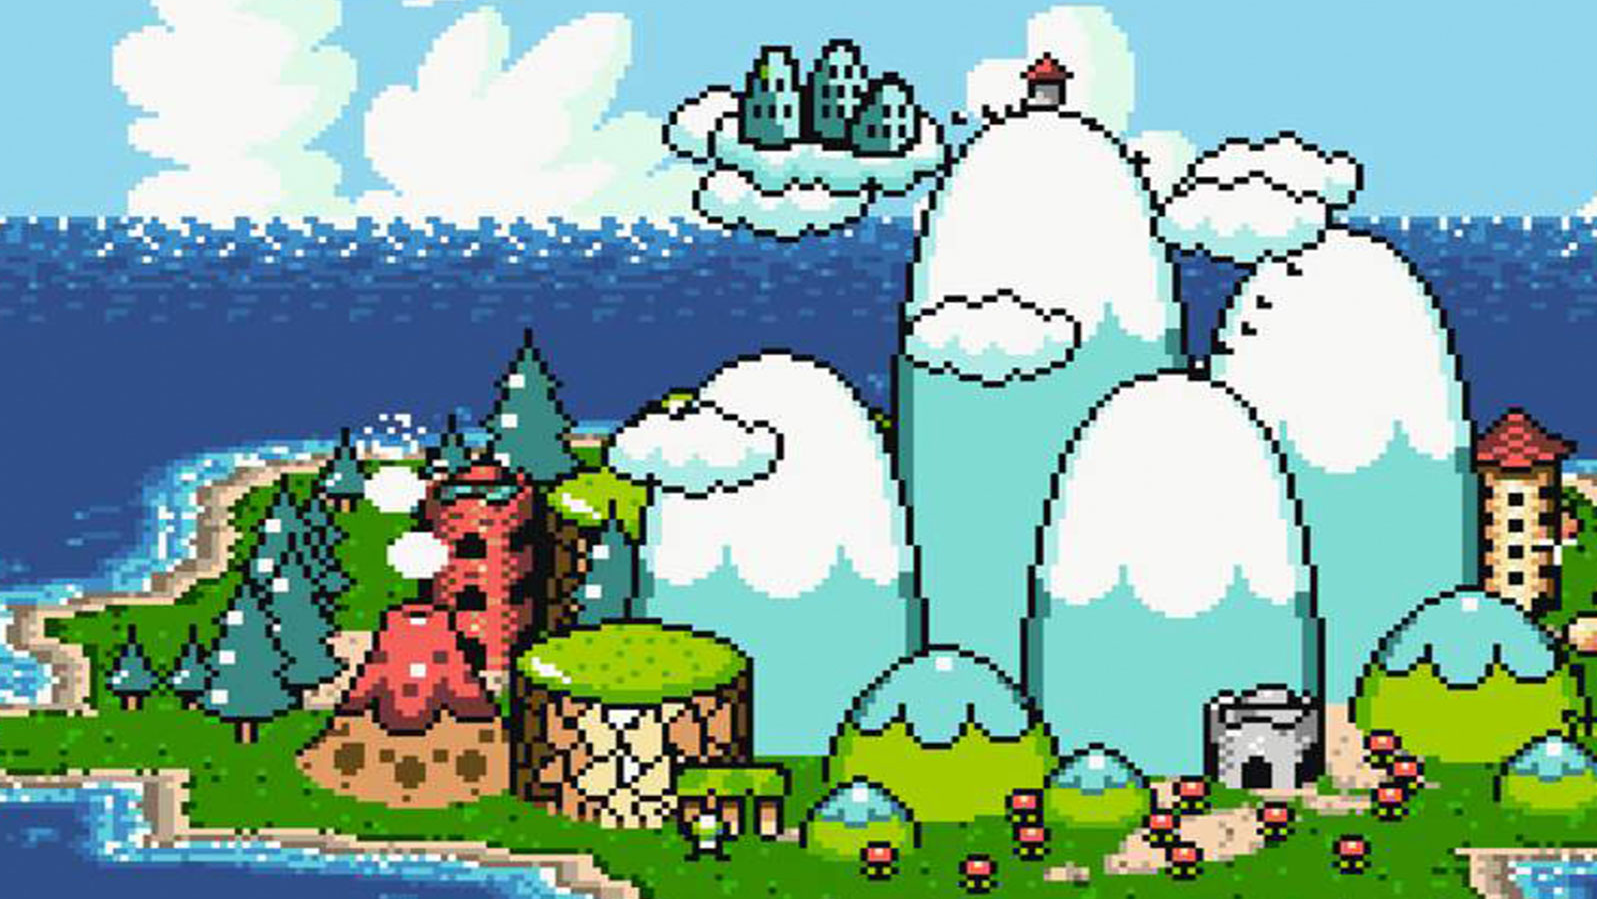 Super mario world yoshi's island. Марио Йоши ворлд 2 остров. Марио Исланд. Super Mario World 2 - Yoshi's Island Snes. Super Mario Yoshi Island.